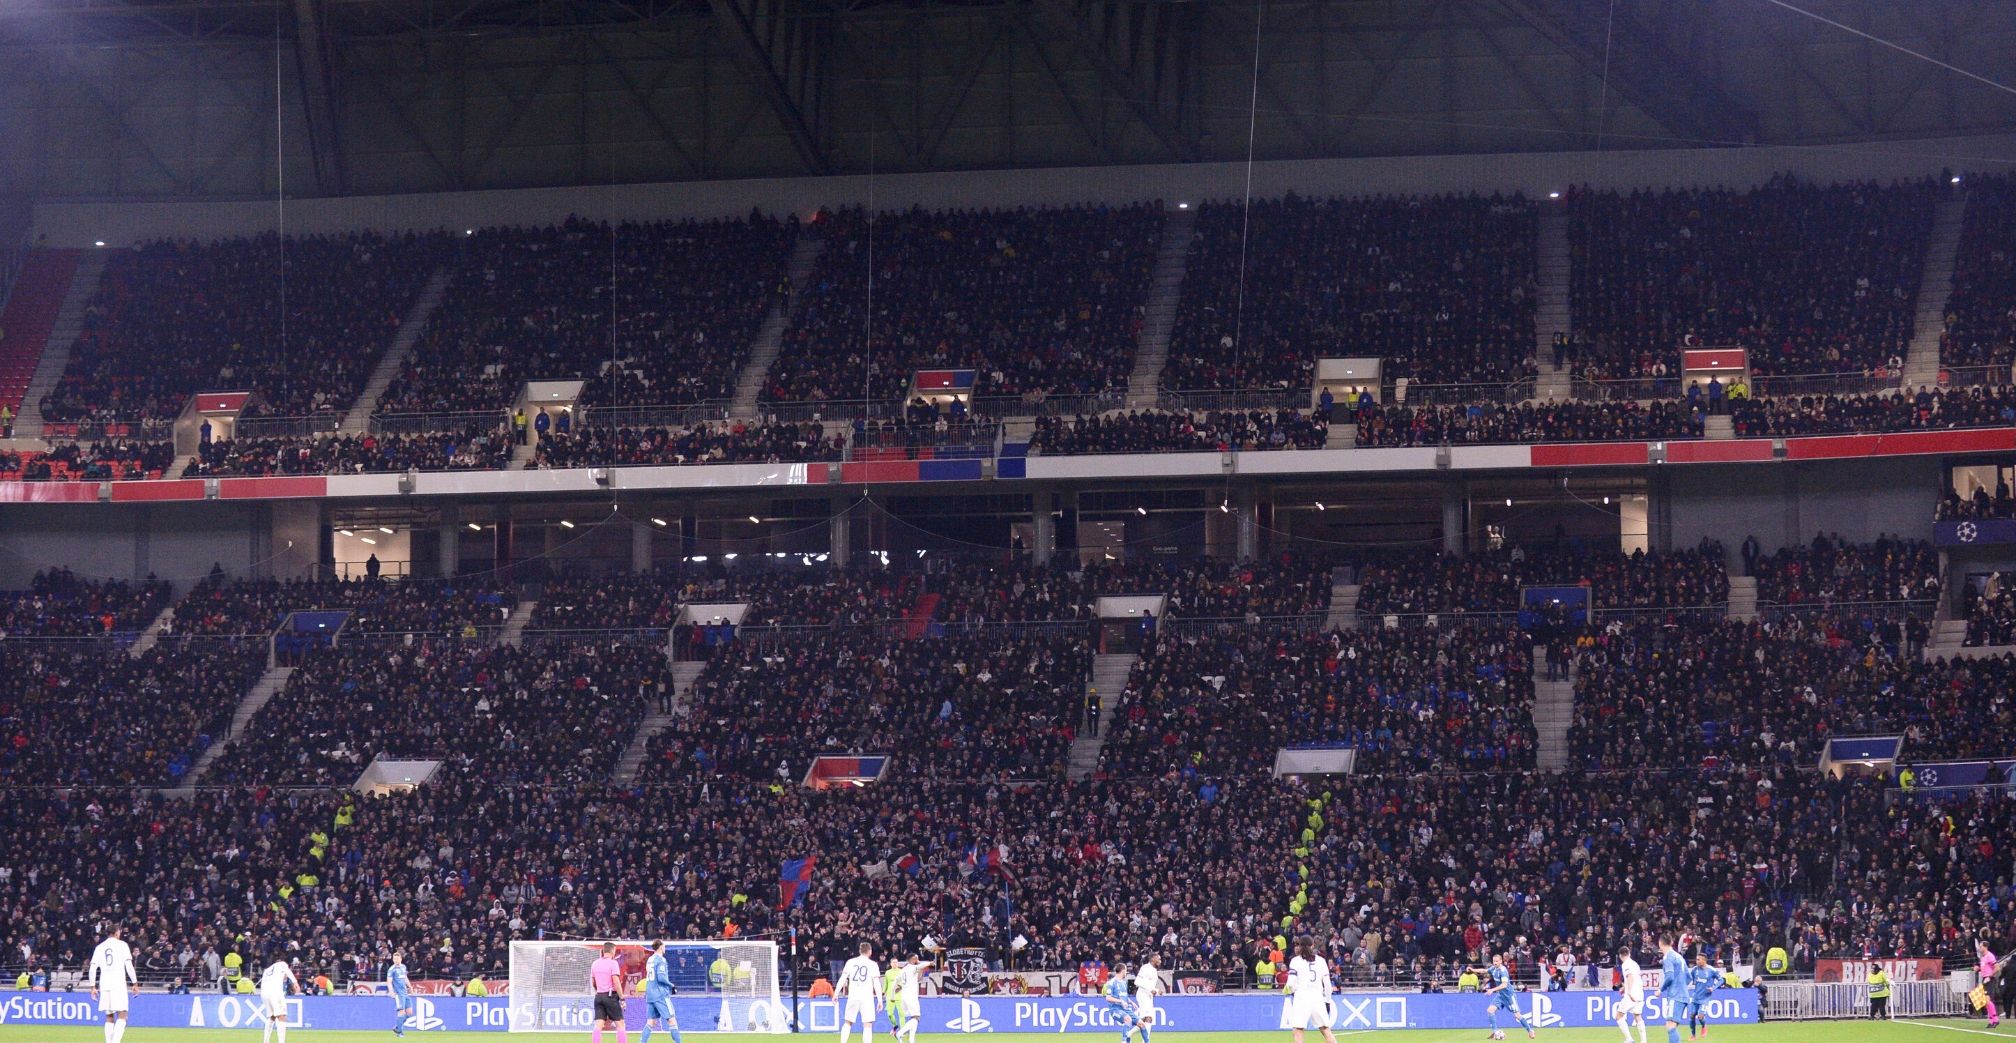 Lyon Groupama Stadium crowd